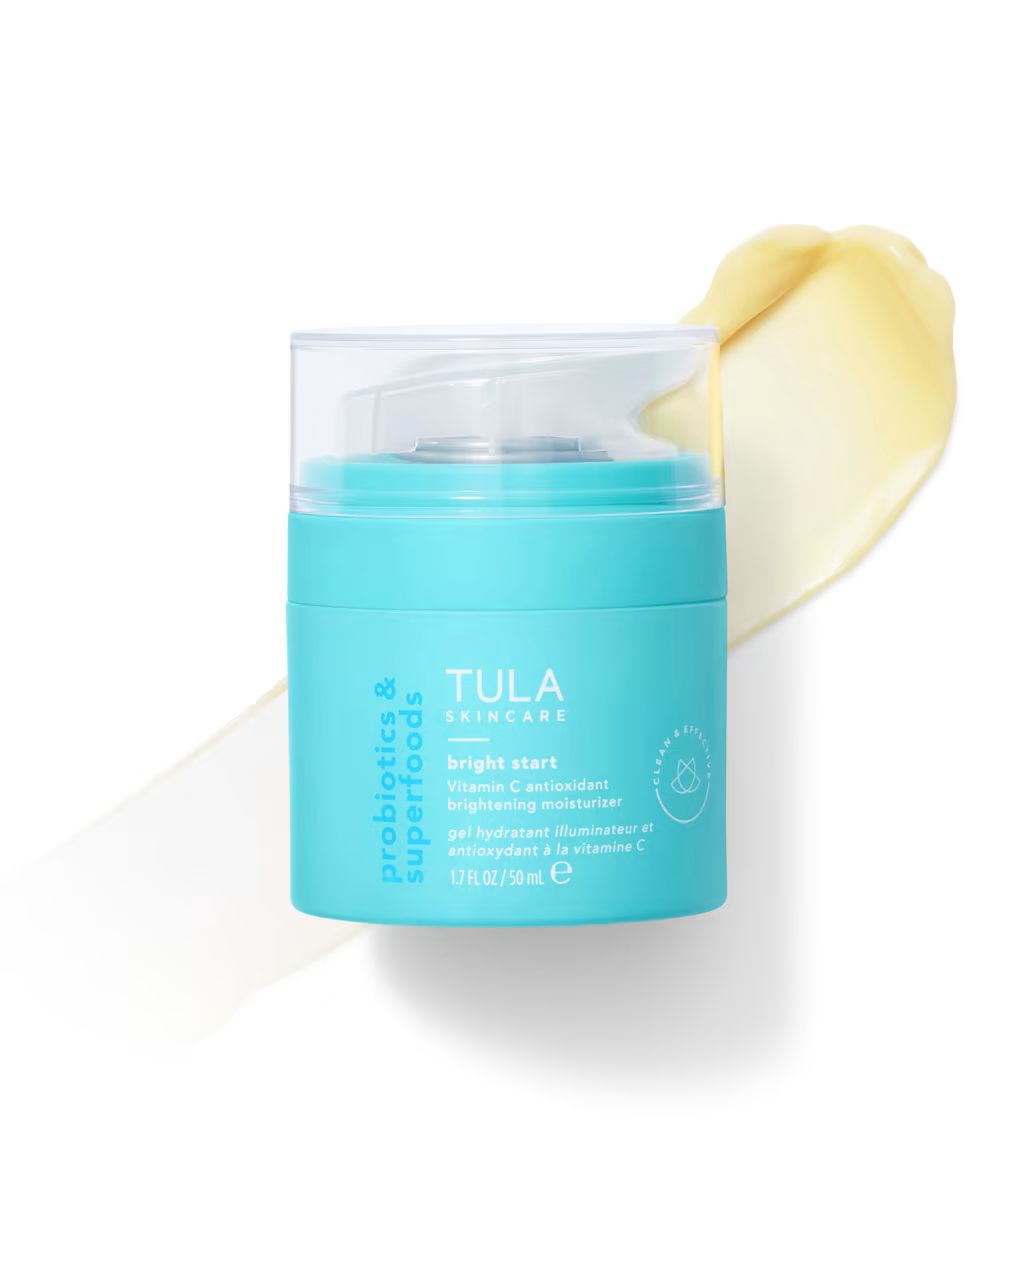 vitamin C antioxidant brightening moisturizer | Tula Skincare